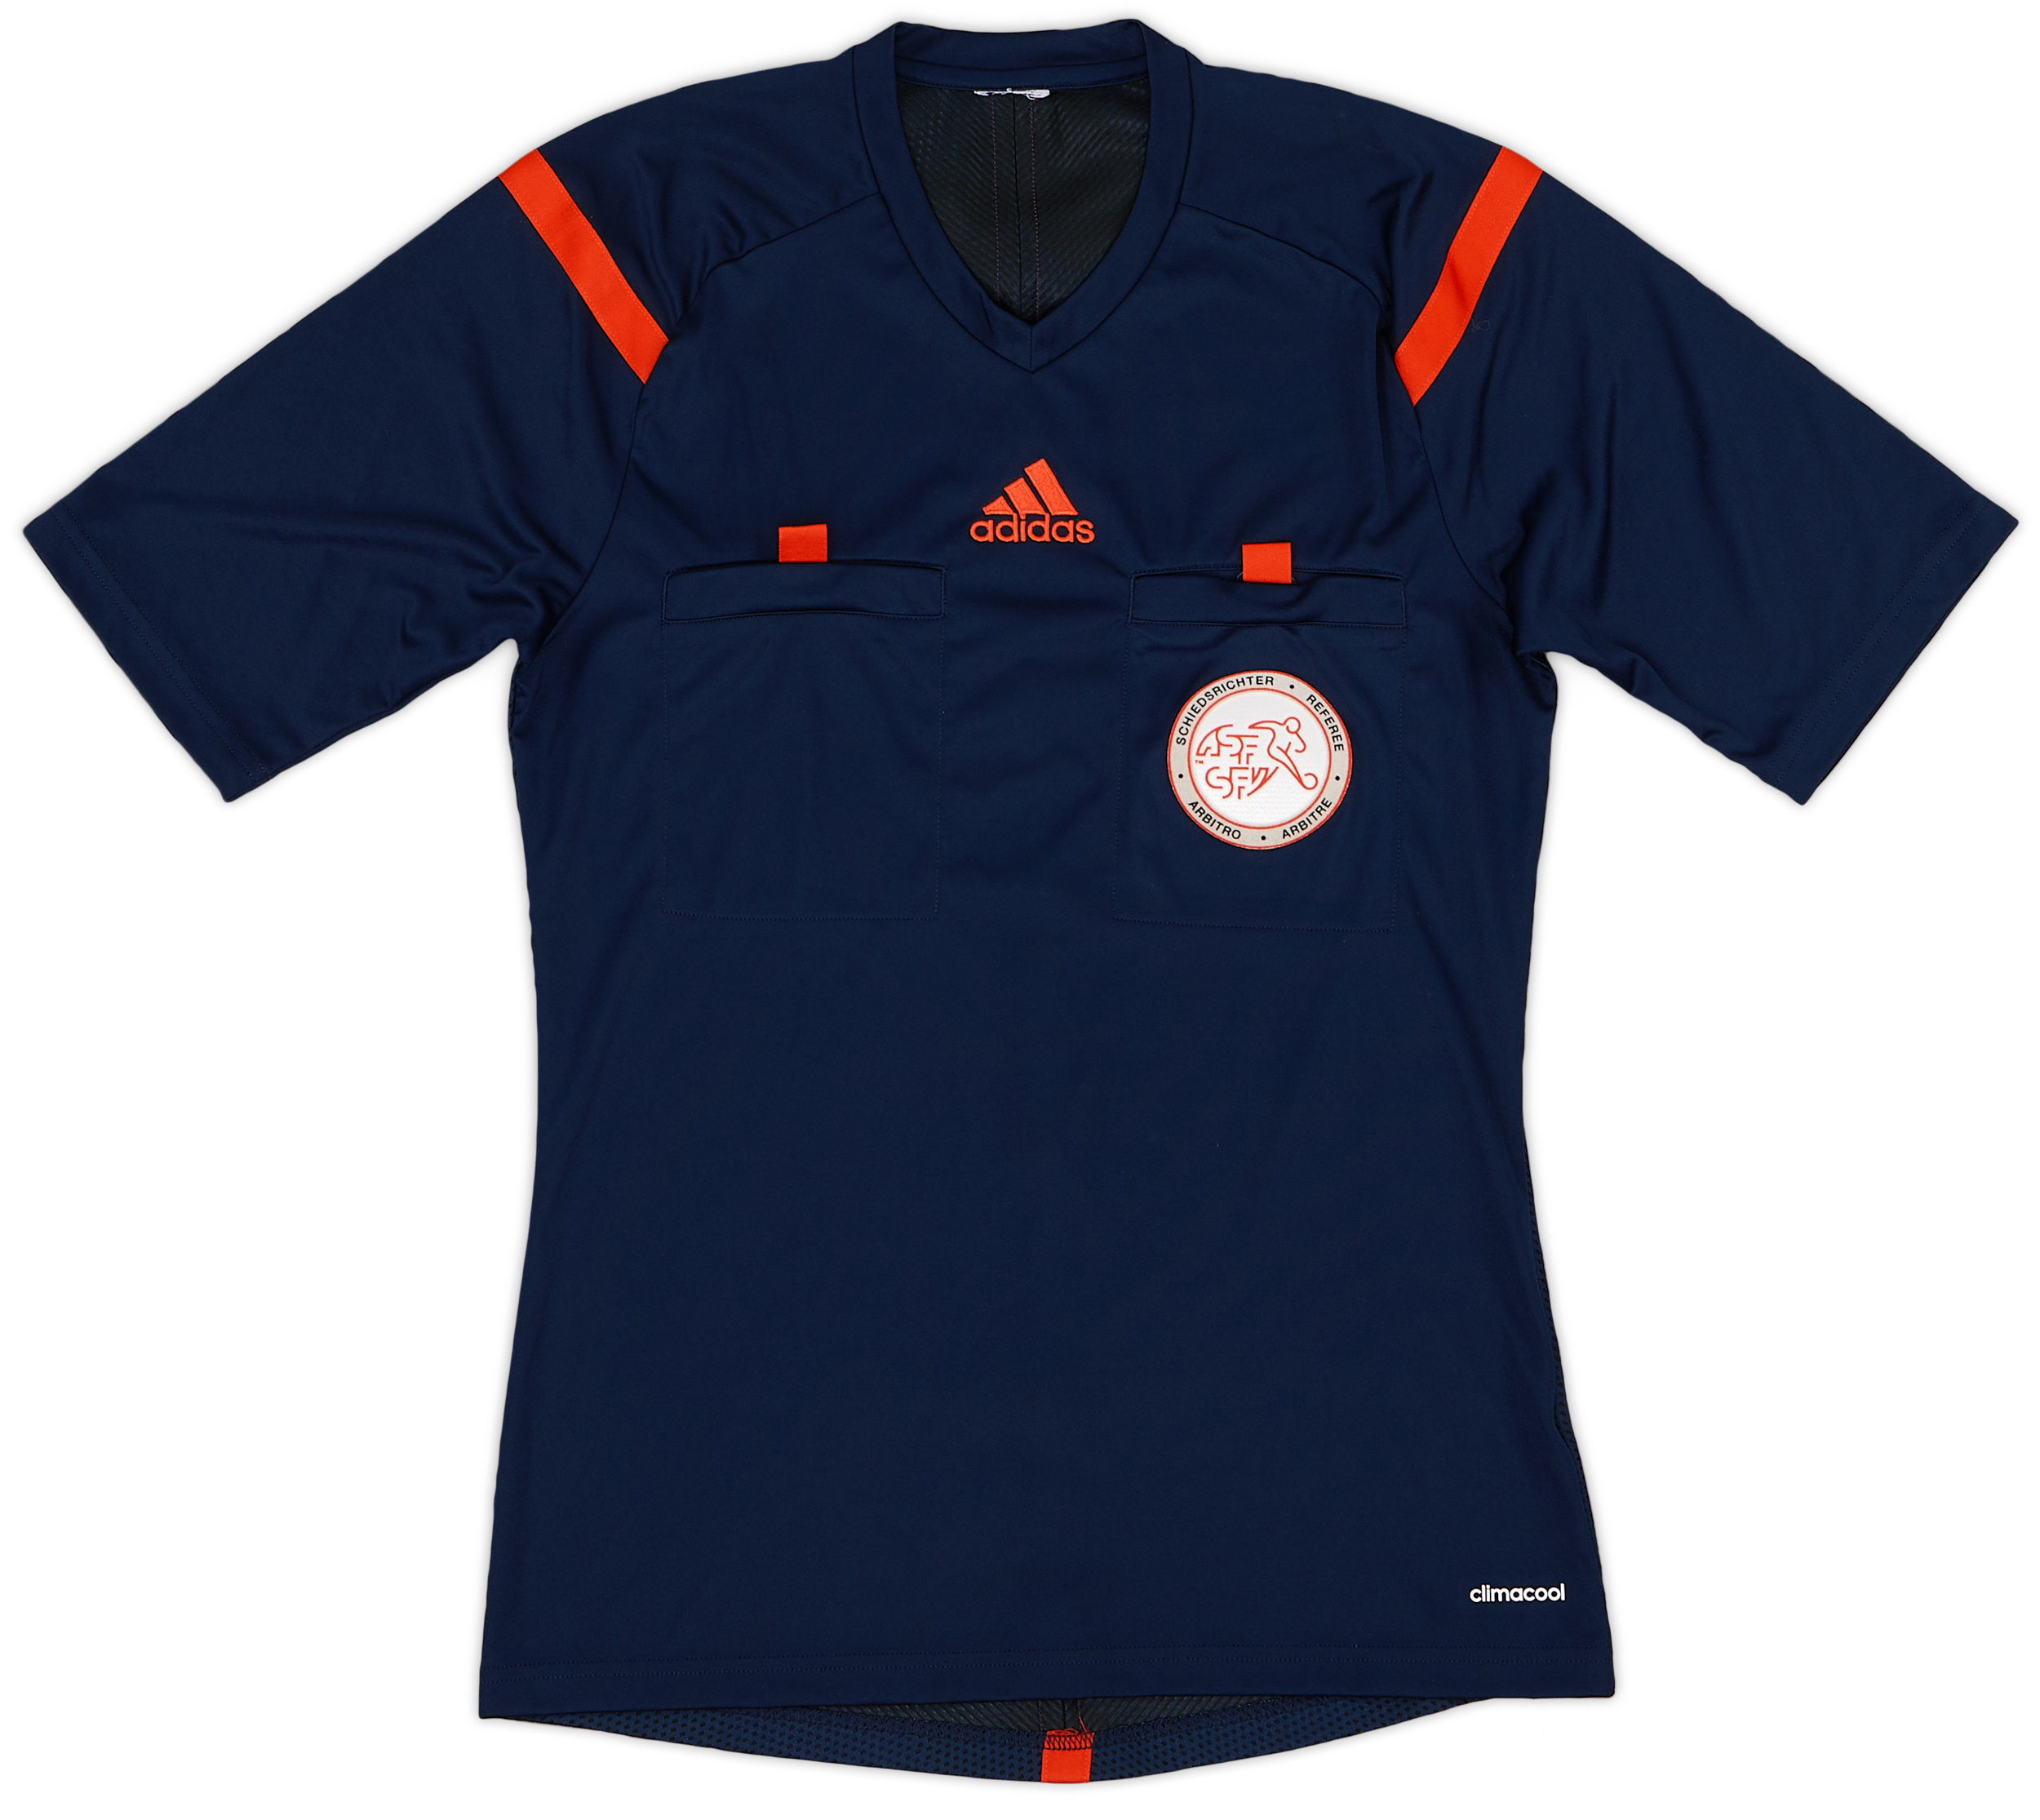 2010s Switzerland adidas Referee Shirt - 7/10 - ()